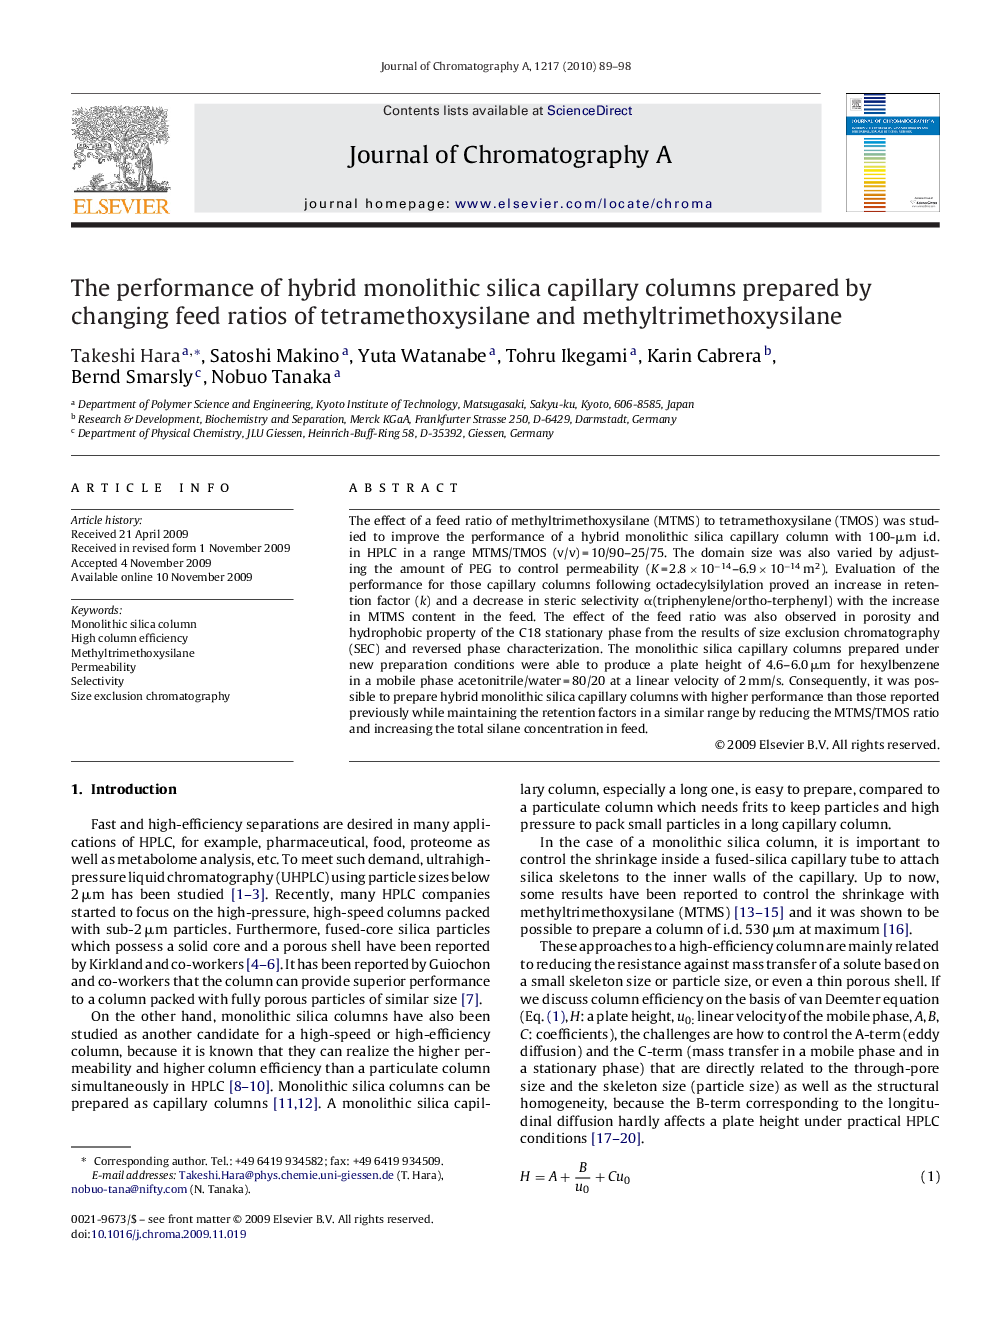 The performance of hybrid monolithic silica capillary columns prepared by changing feed ratios of tetramethoxysilane and methyltrimethoxysilane